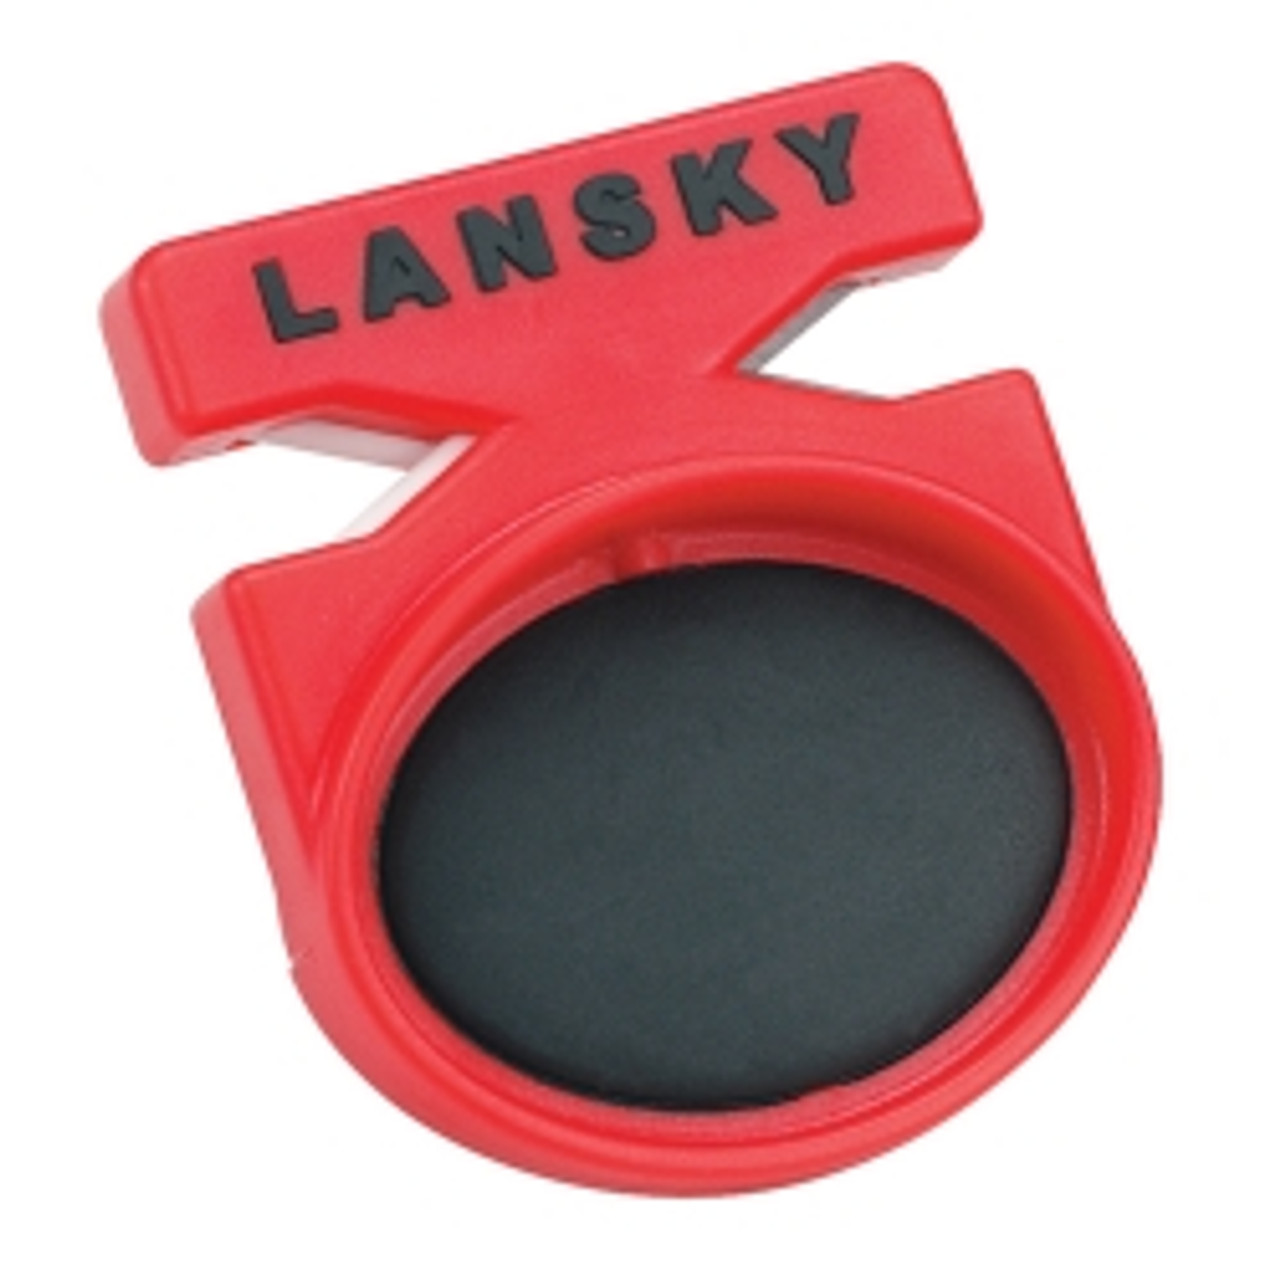 Lansky The Mini Crock Stick Knife Sharpener - LCKEY